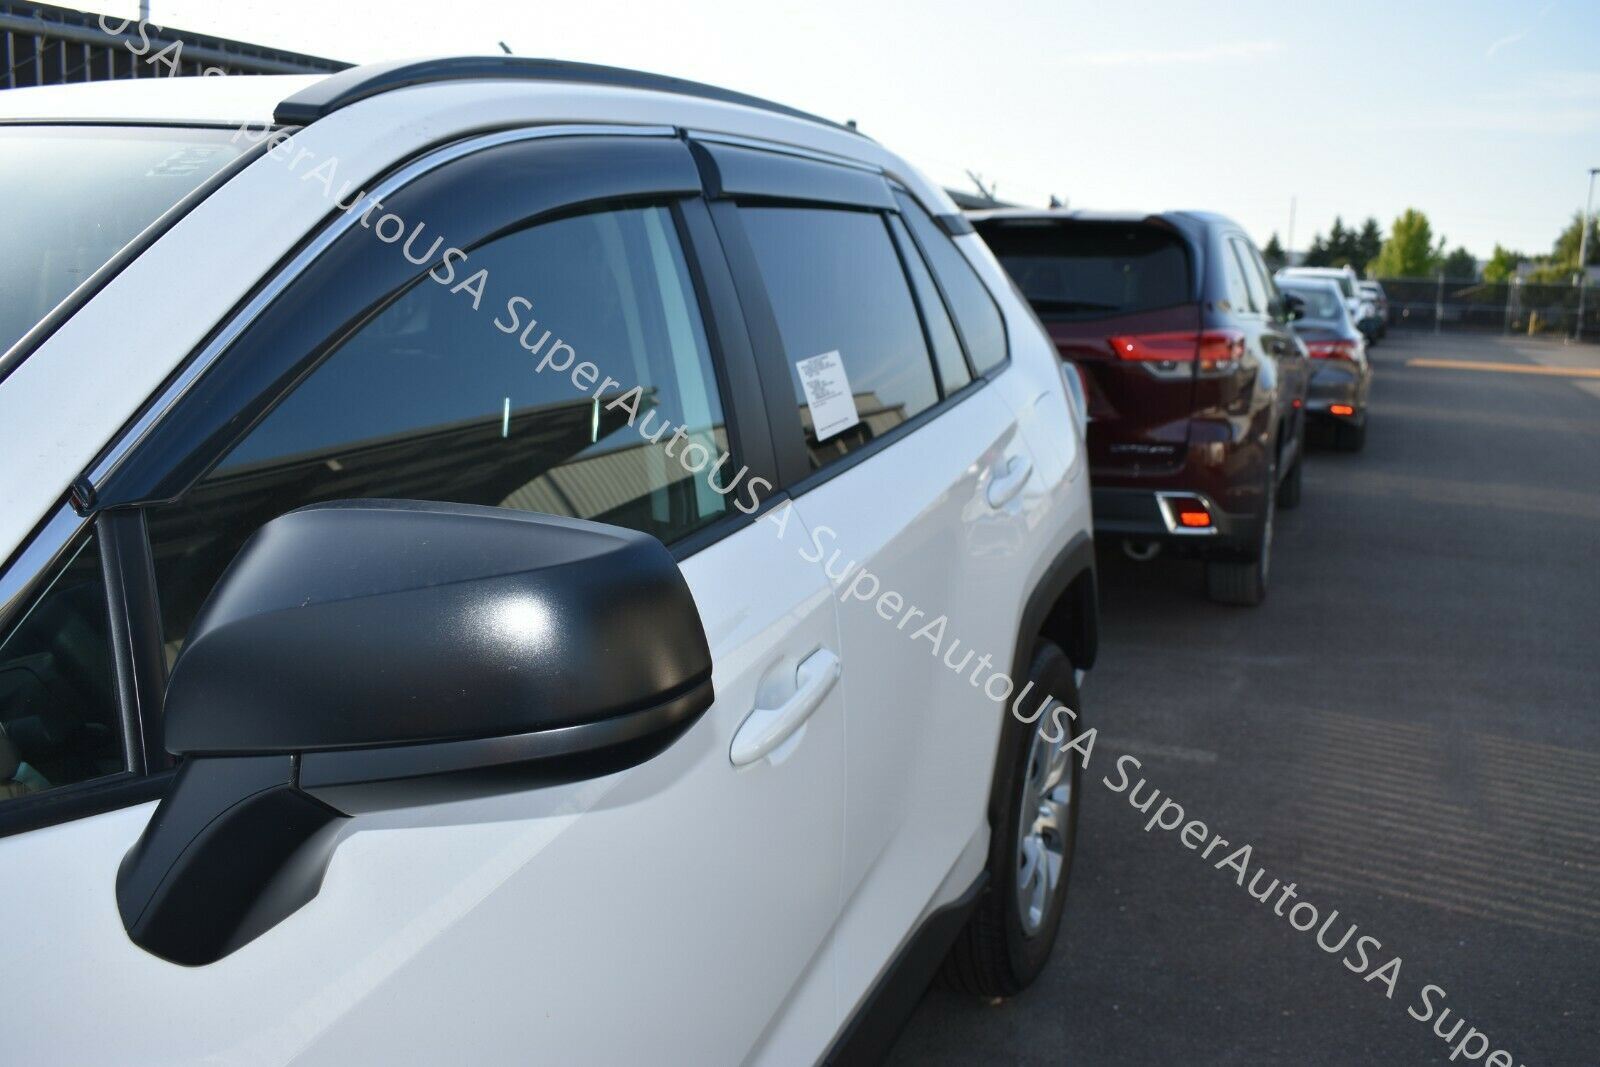 Fit 2015-2021 Chevrolet Suburban Clip-On Chrome Trim Vent Window Visors Rain Sun Wind Guards Shade Deflectors